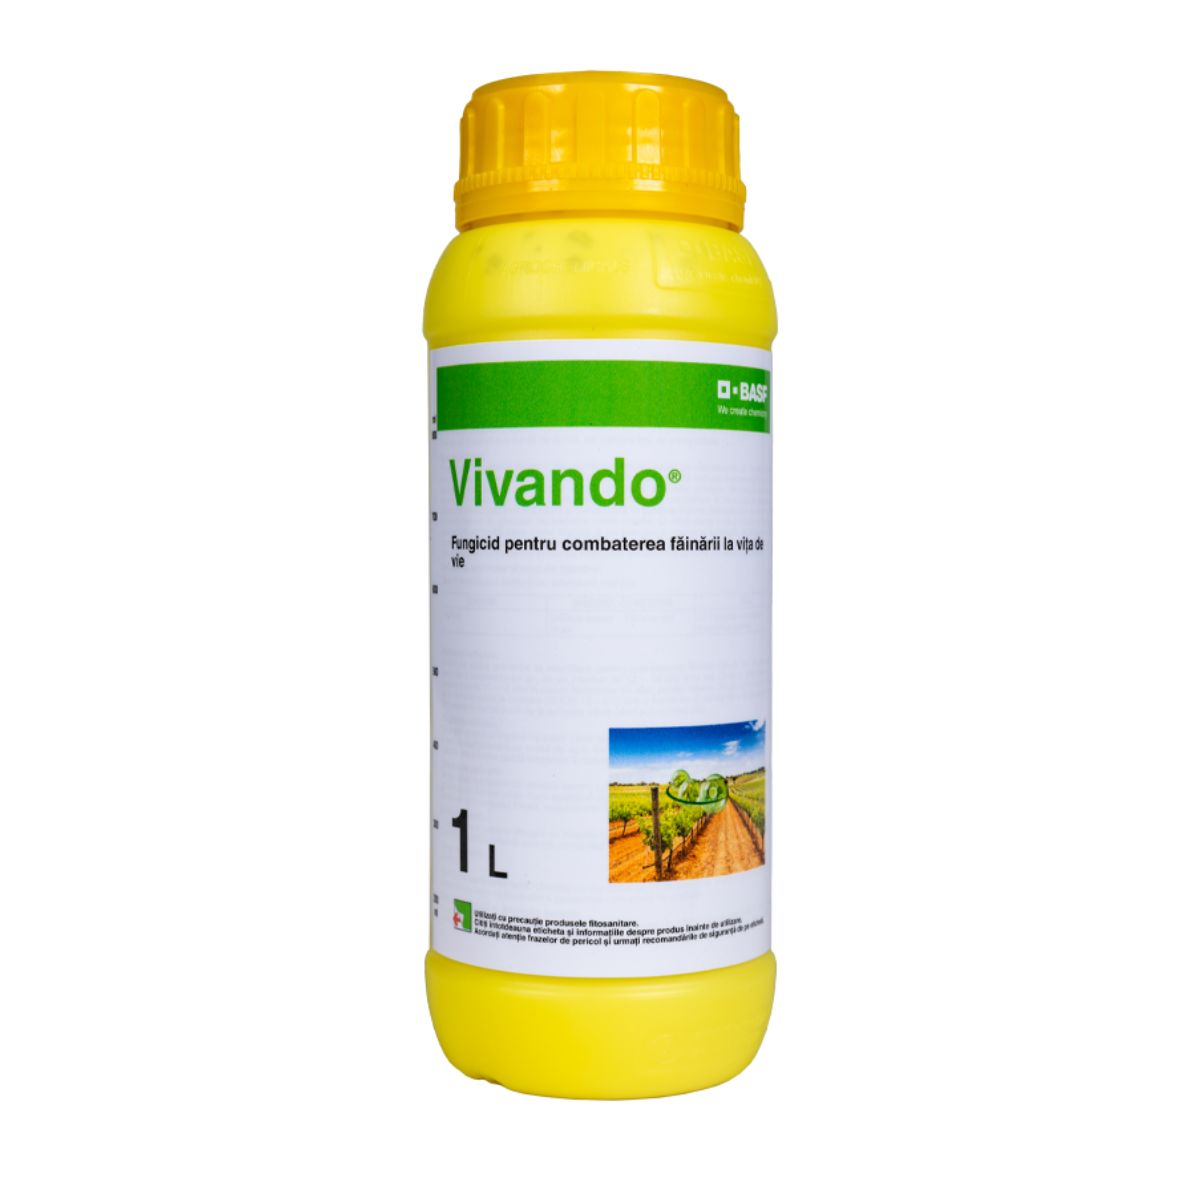 Fungicide - Fungicid pentru vita de vie, 1 L, Vivando, BASF, hectarul.ro